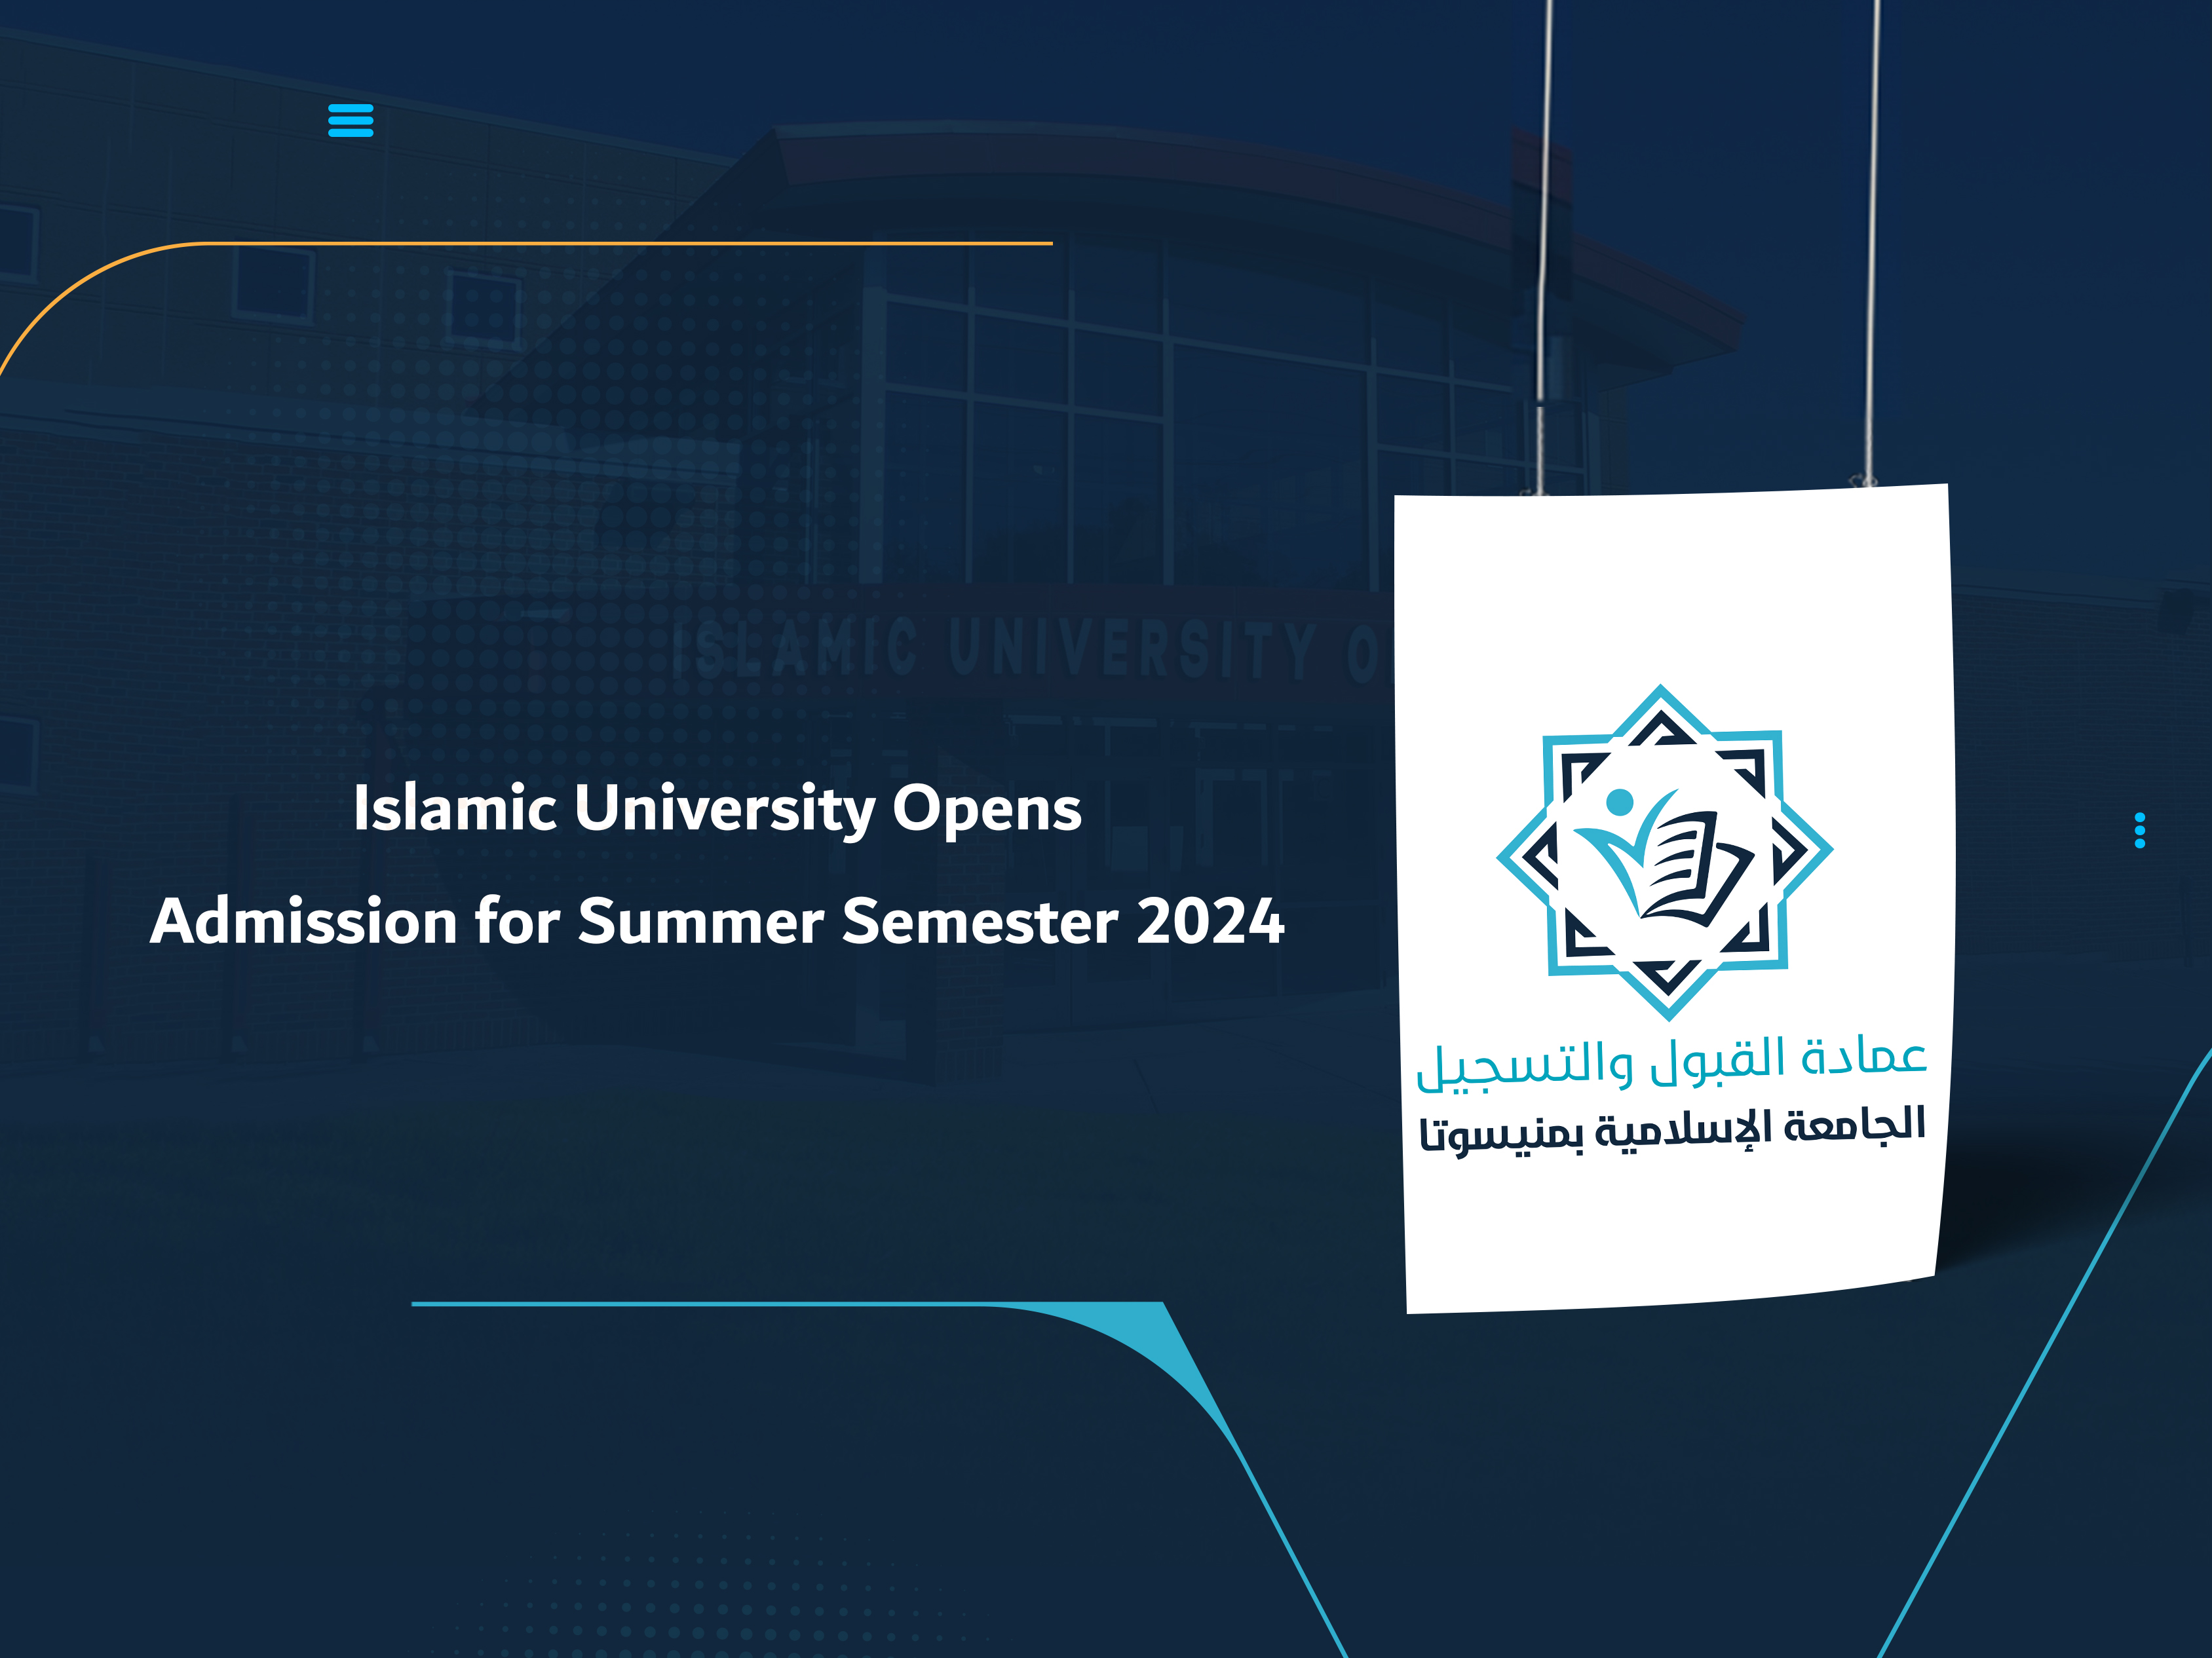 Islamic University Opens Admission for Summer Semester 2024